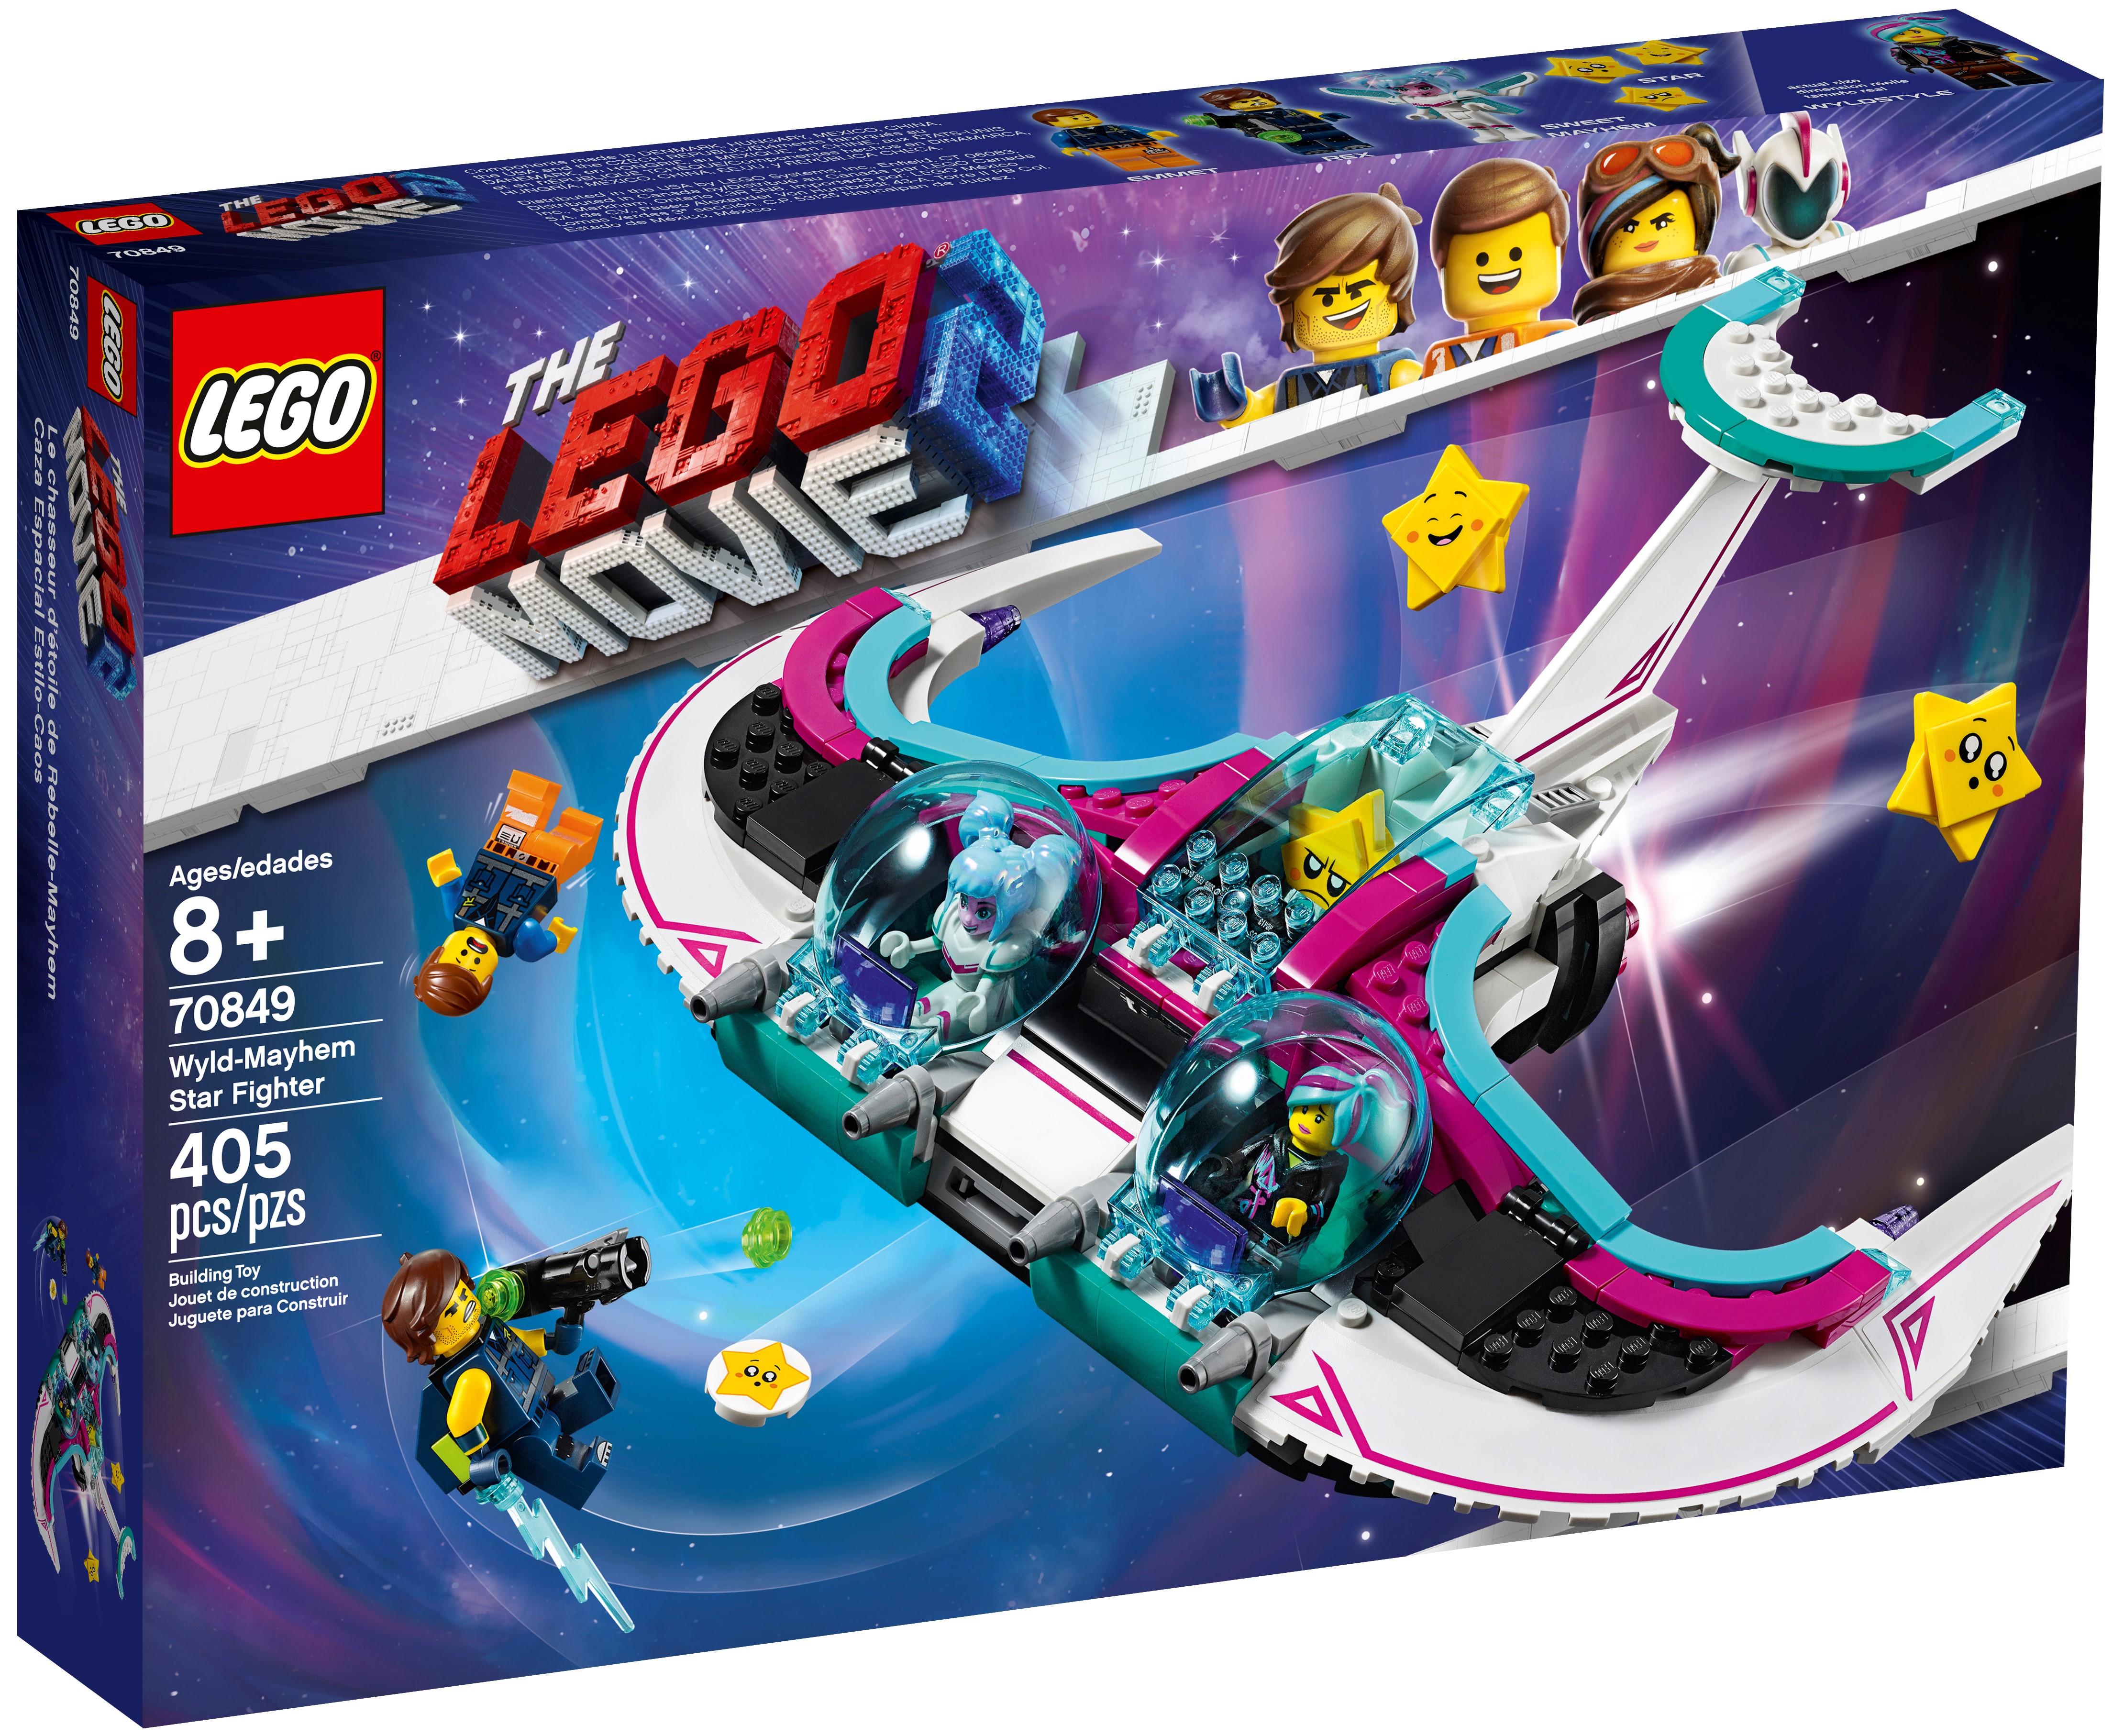 Wyld-Mayhem Star Fighter 70849 | THE LEGO® MOVIE | Buy online at the LEGO® Shop US